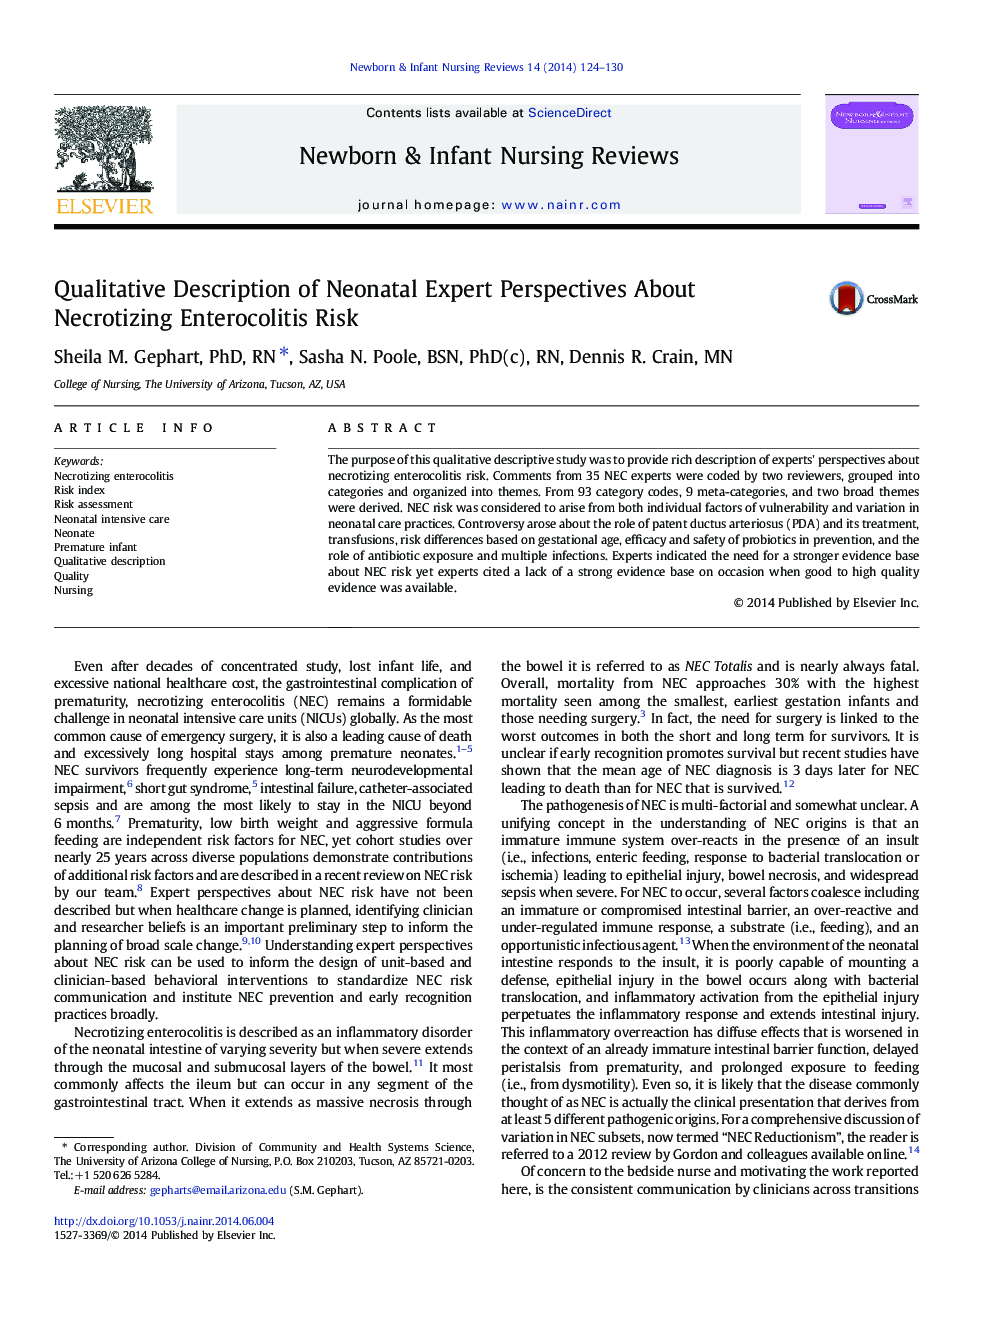 Qualitative Description of Neonatal Expert Perspectives About Necrotizing Enterocolitis Risk